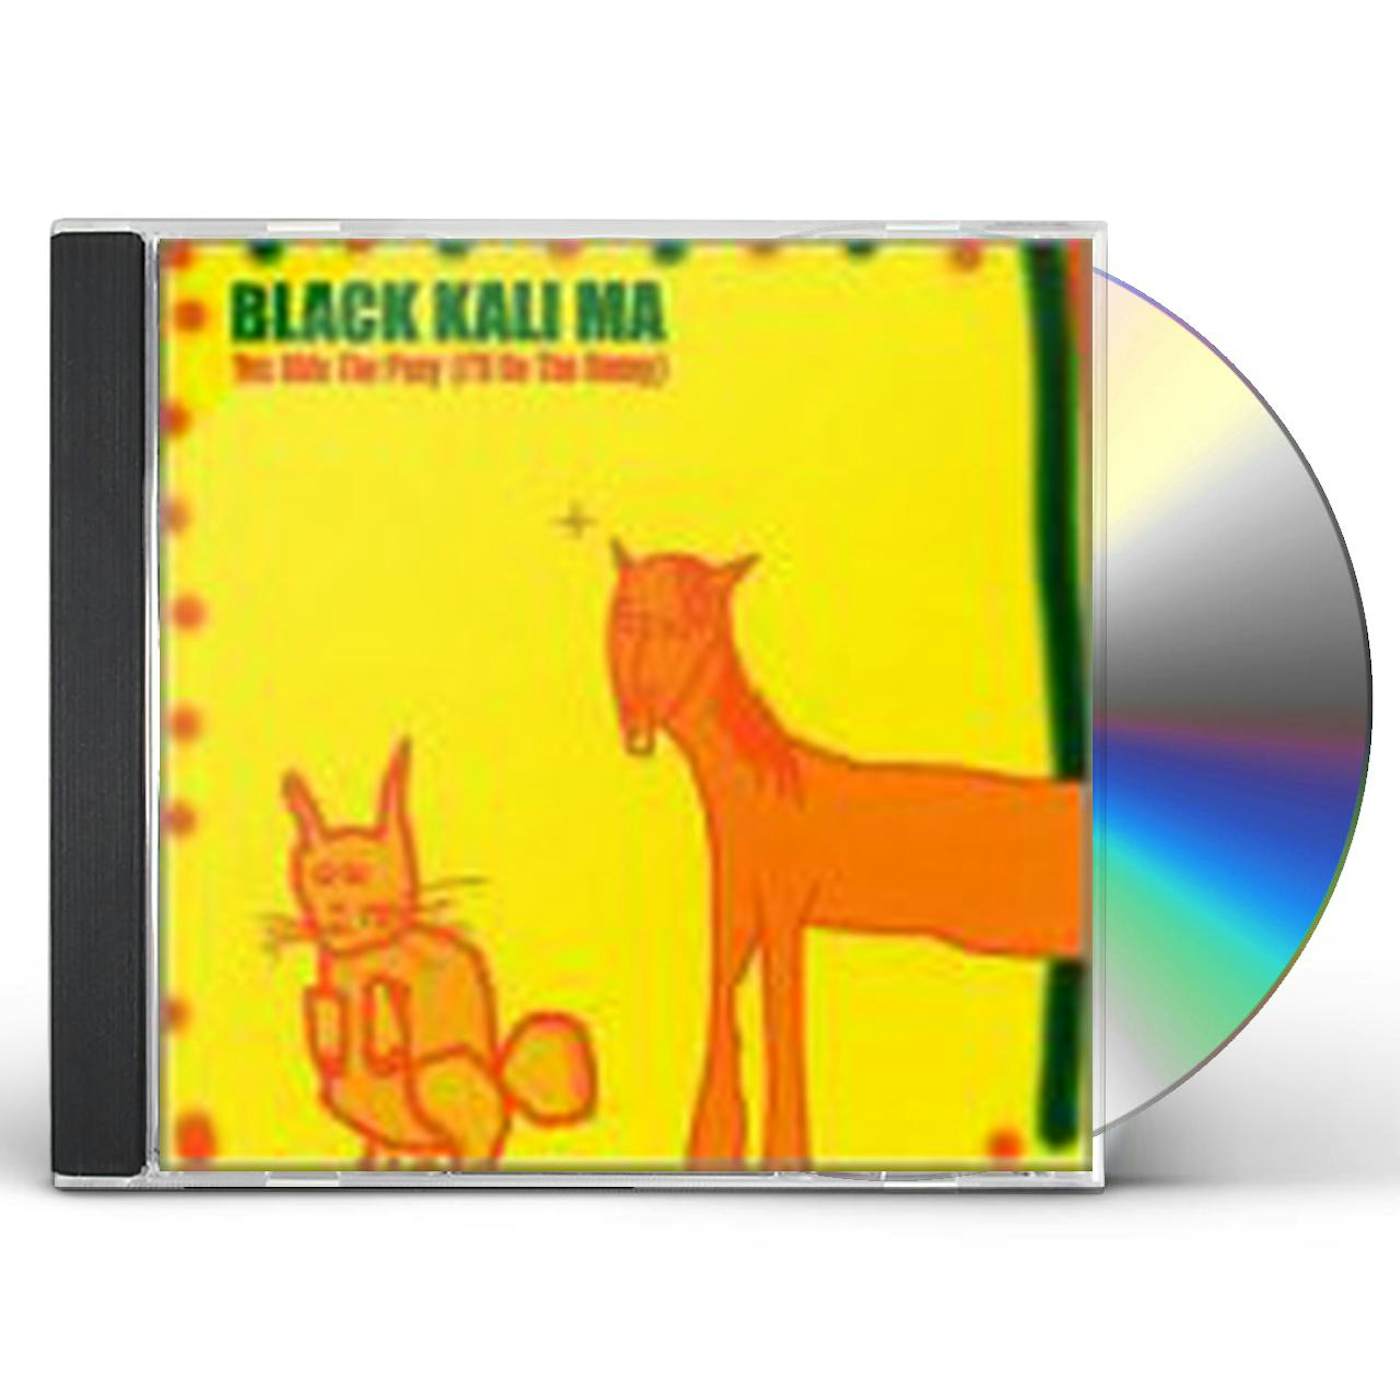 Black Kali Ma YOU RIDE THE PONY I'LL BE THE BUNNY CD